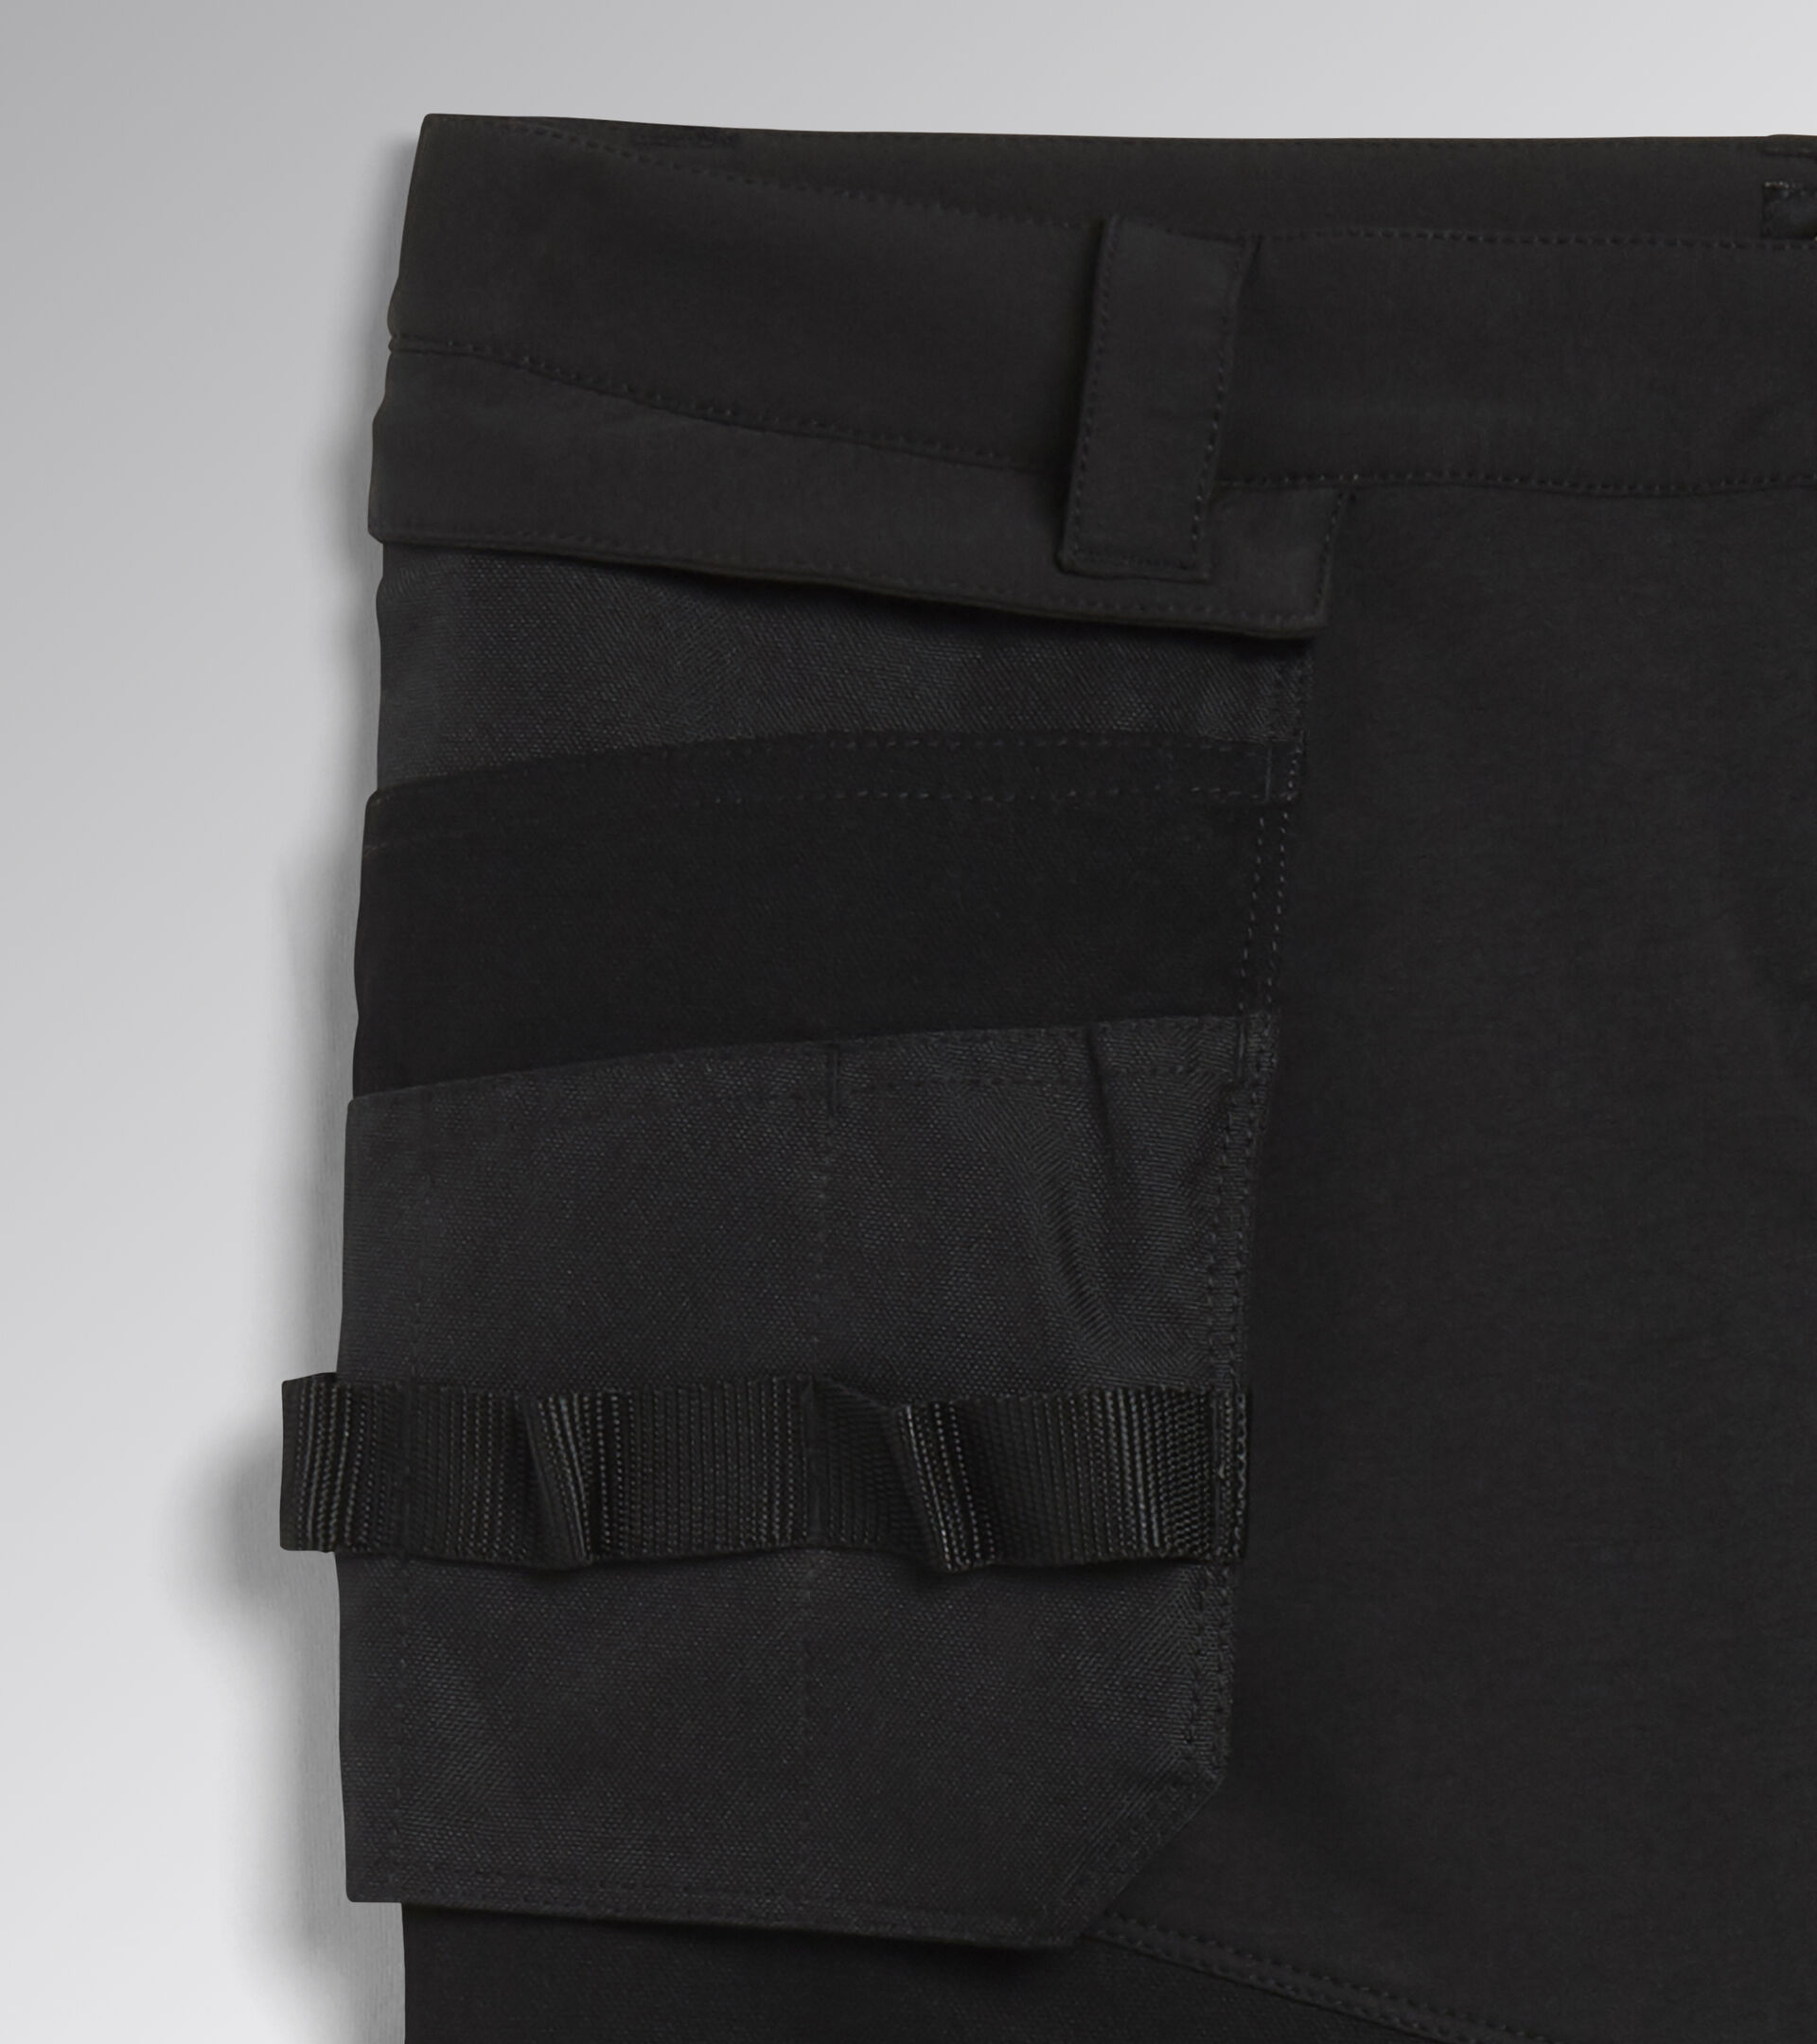 Work trousers PANT MULTI POCKET PERFORMANCE ASPHALT - Utility